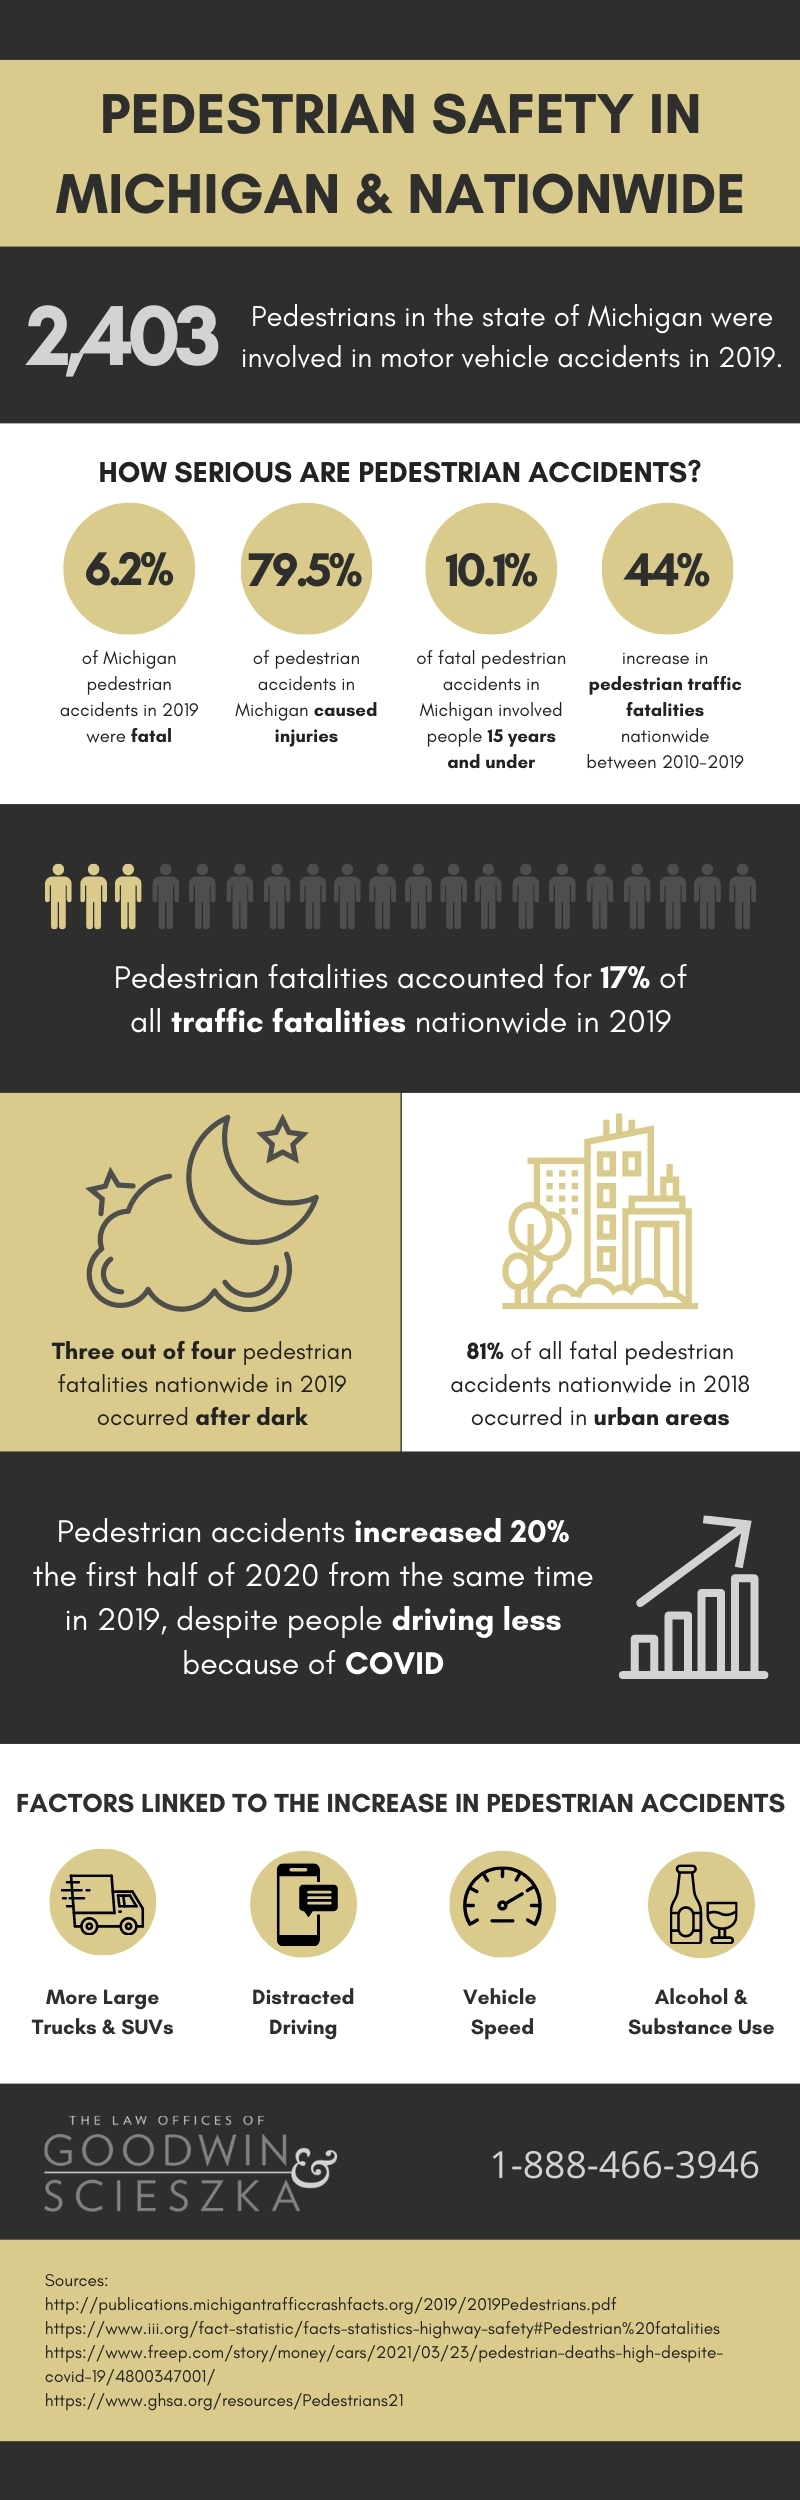 Goodwin & Scieszka Pedestrian Safety Infographic